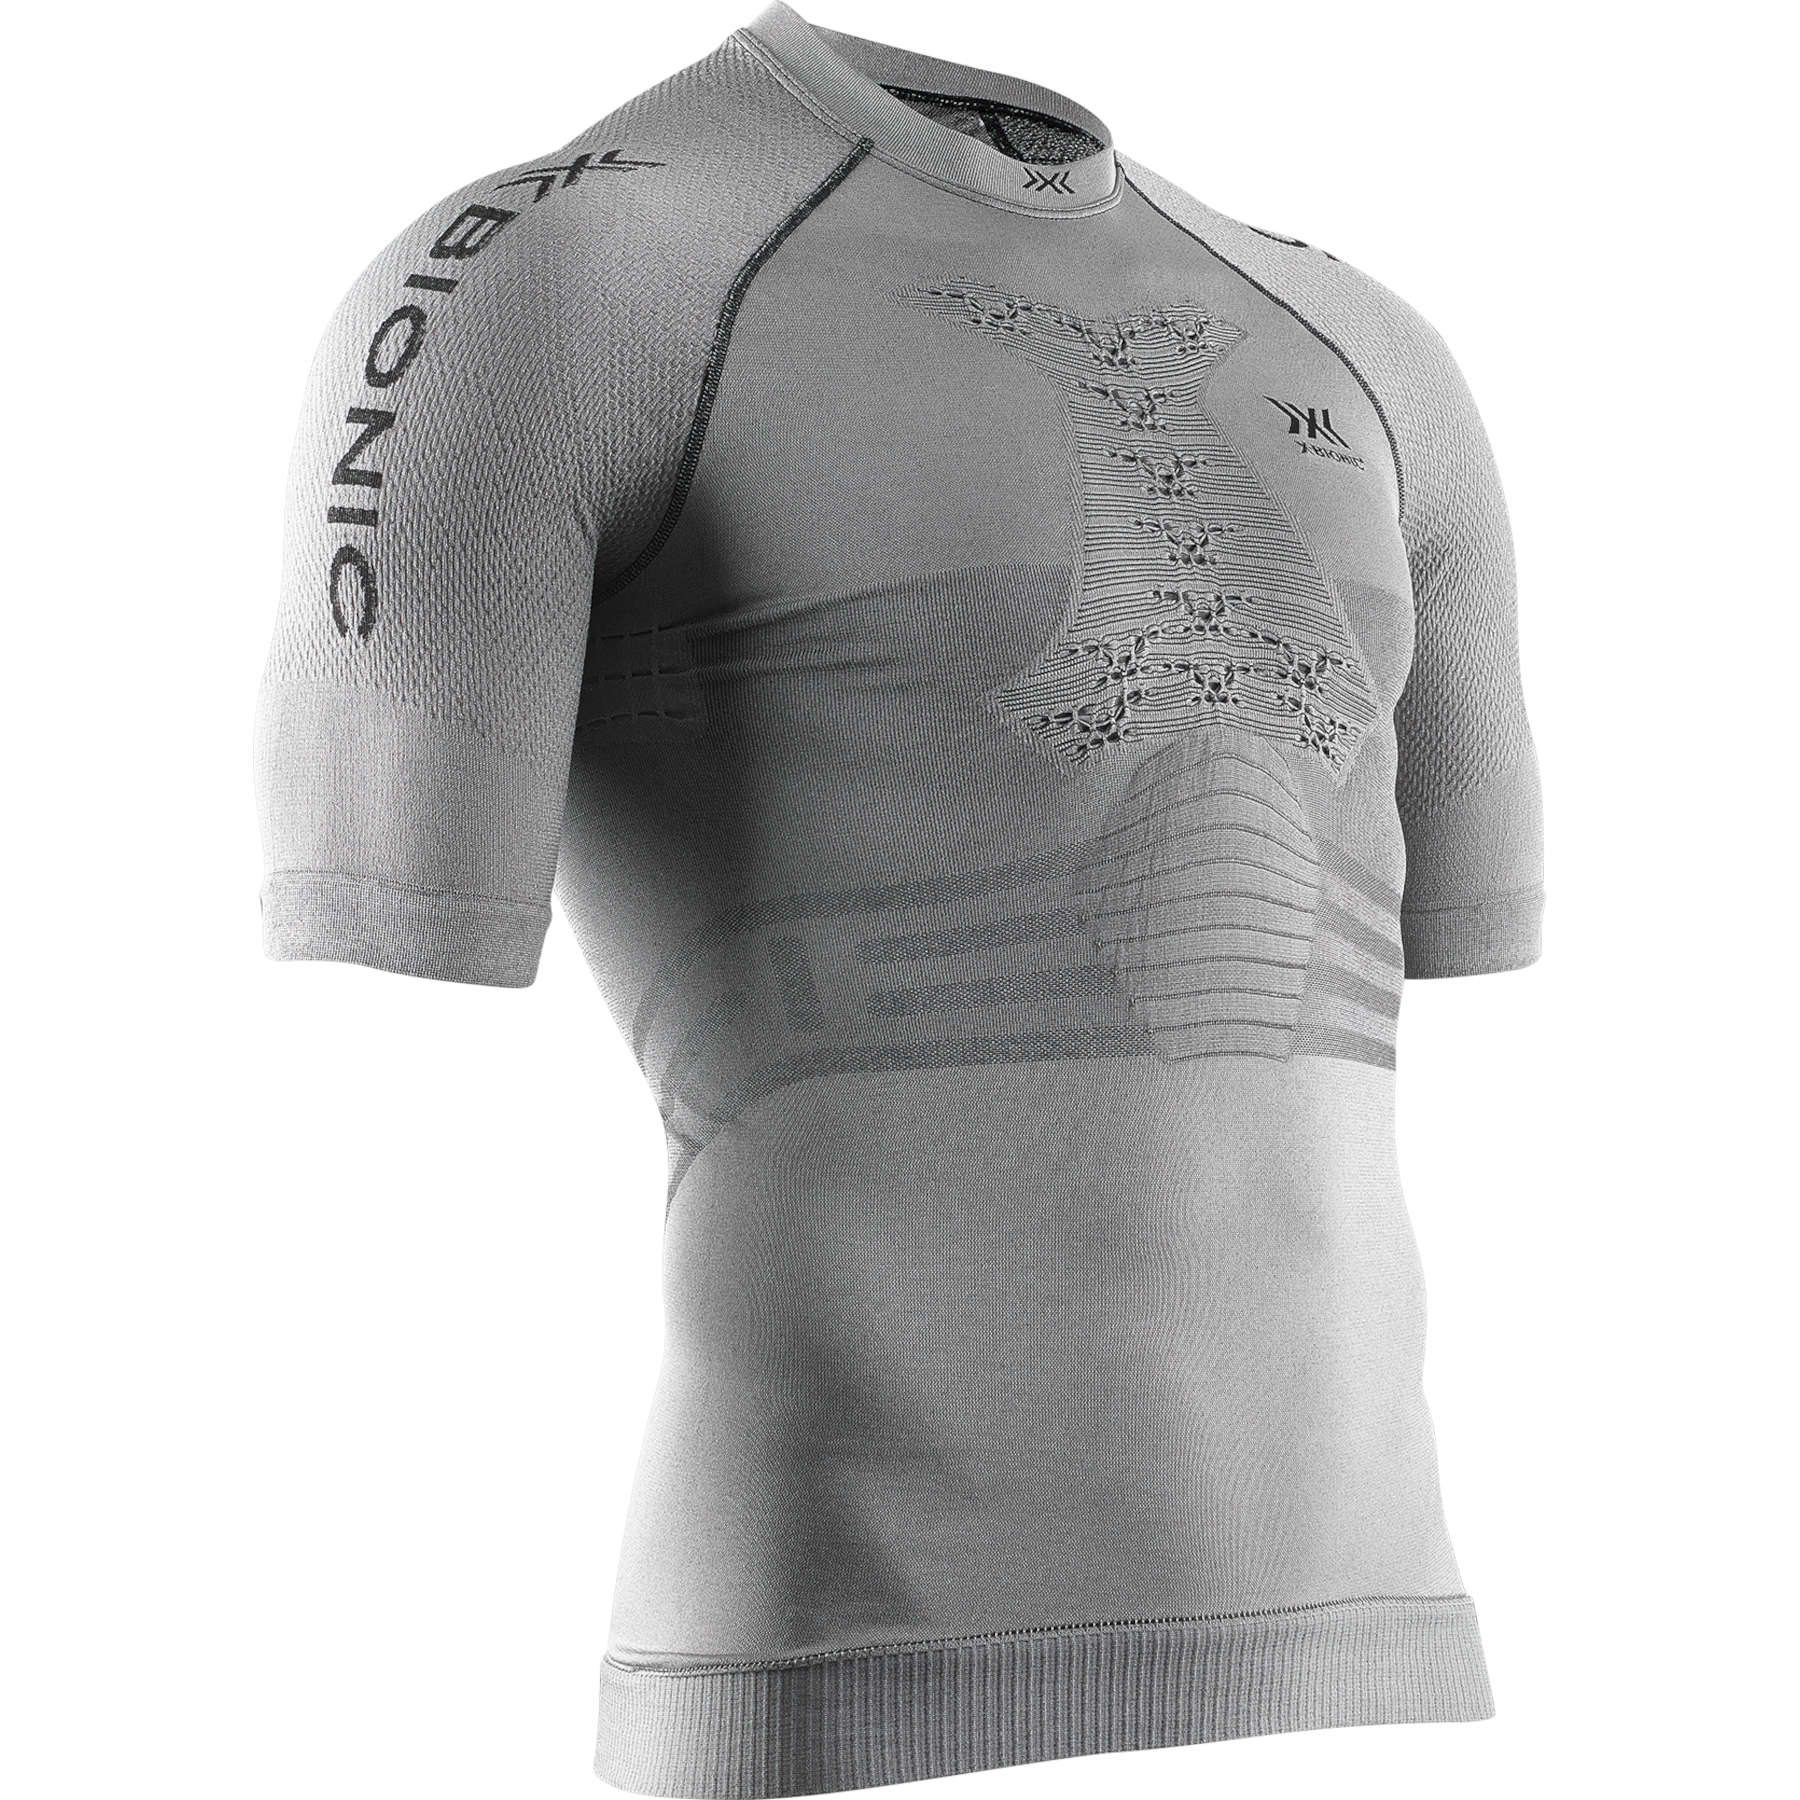 Productfoto van X-Bionic Fennec 4.0 Run Shirt Heren - anthracite/silver